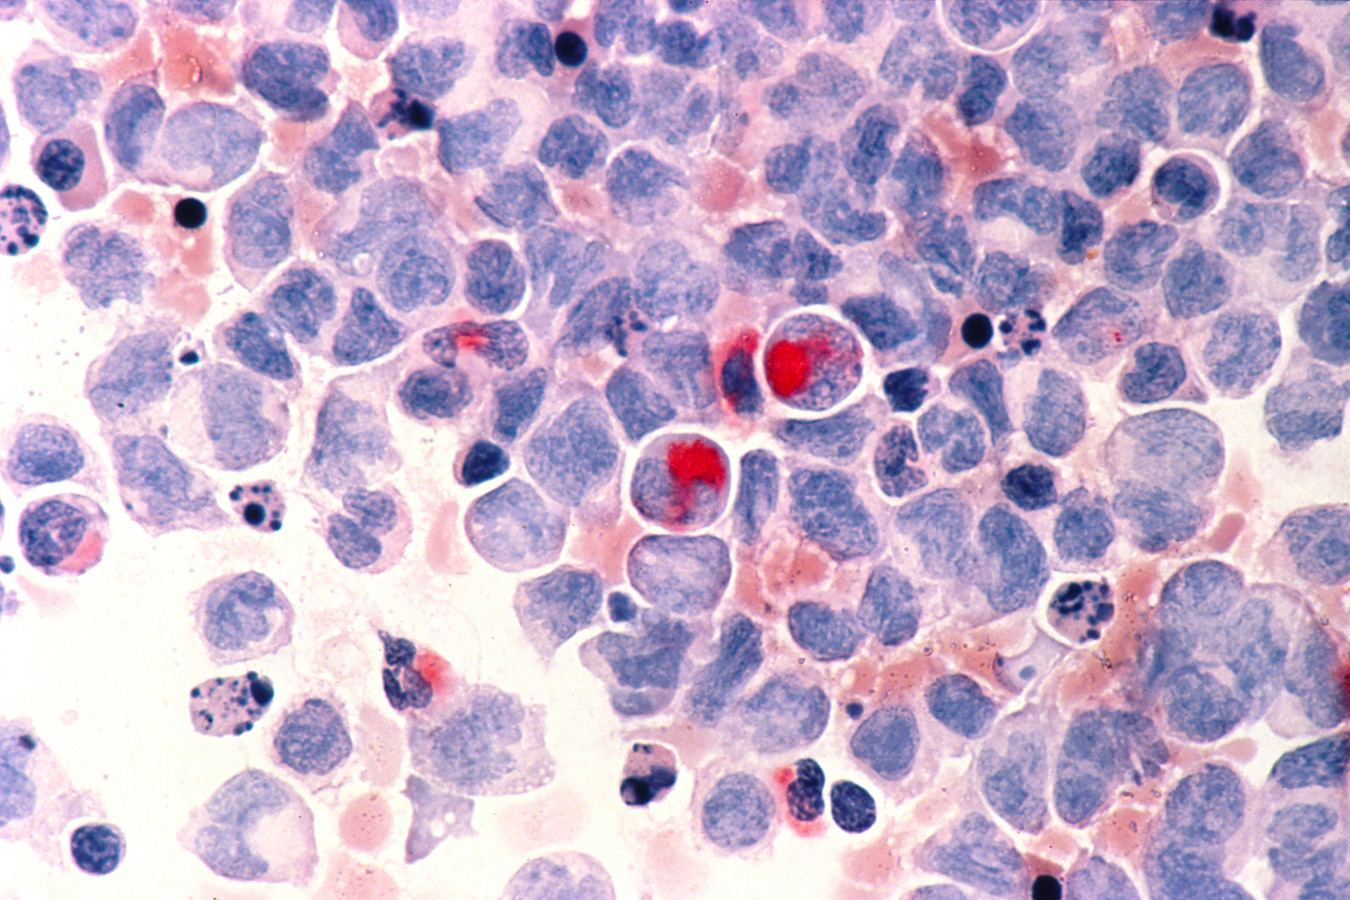 Acute myelocytic leukemia, AML